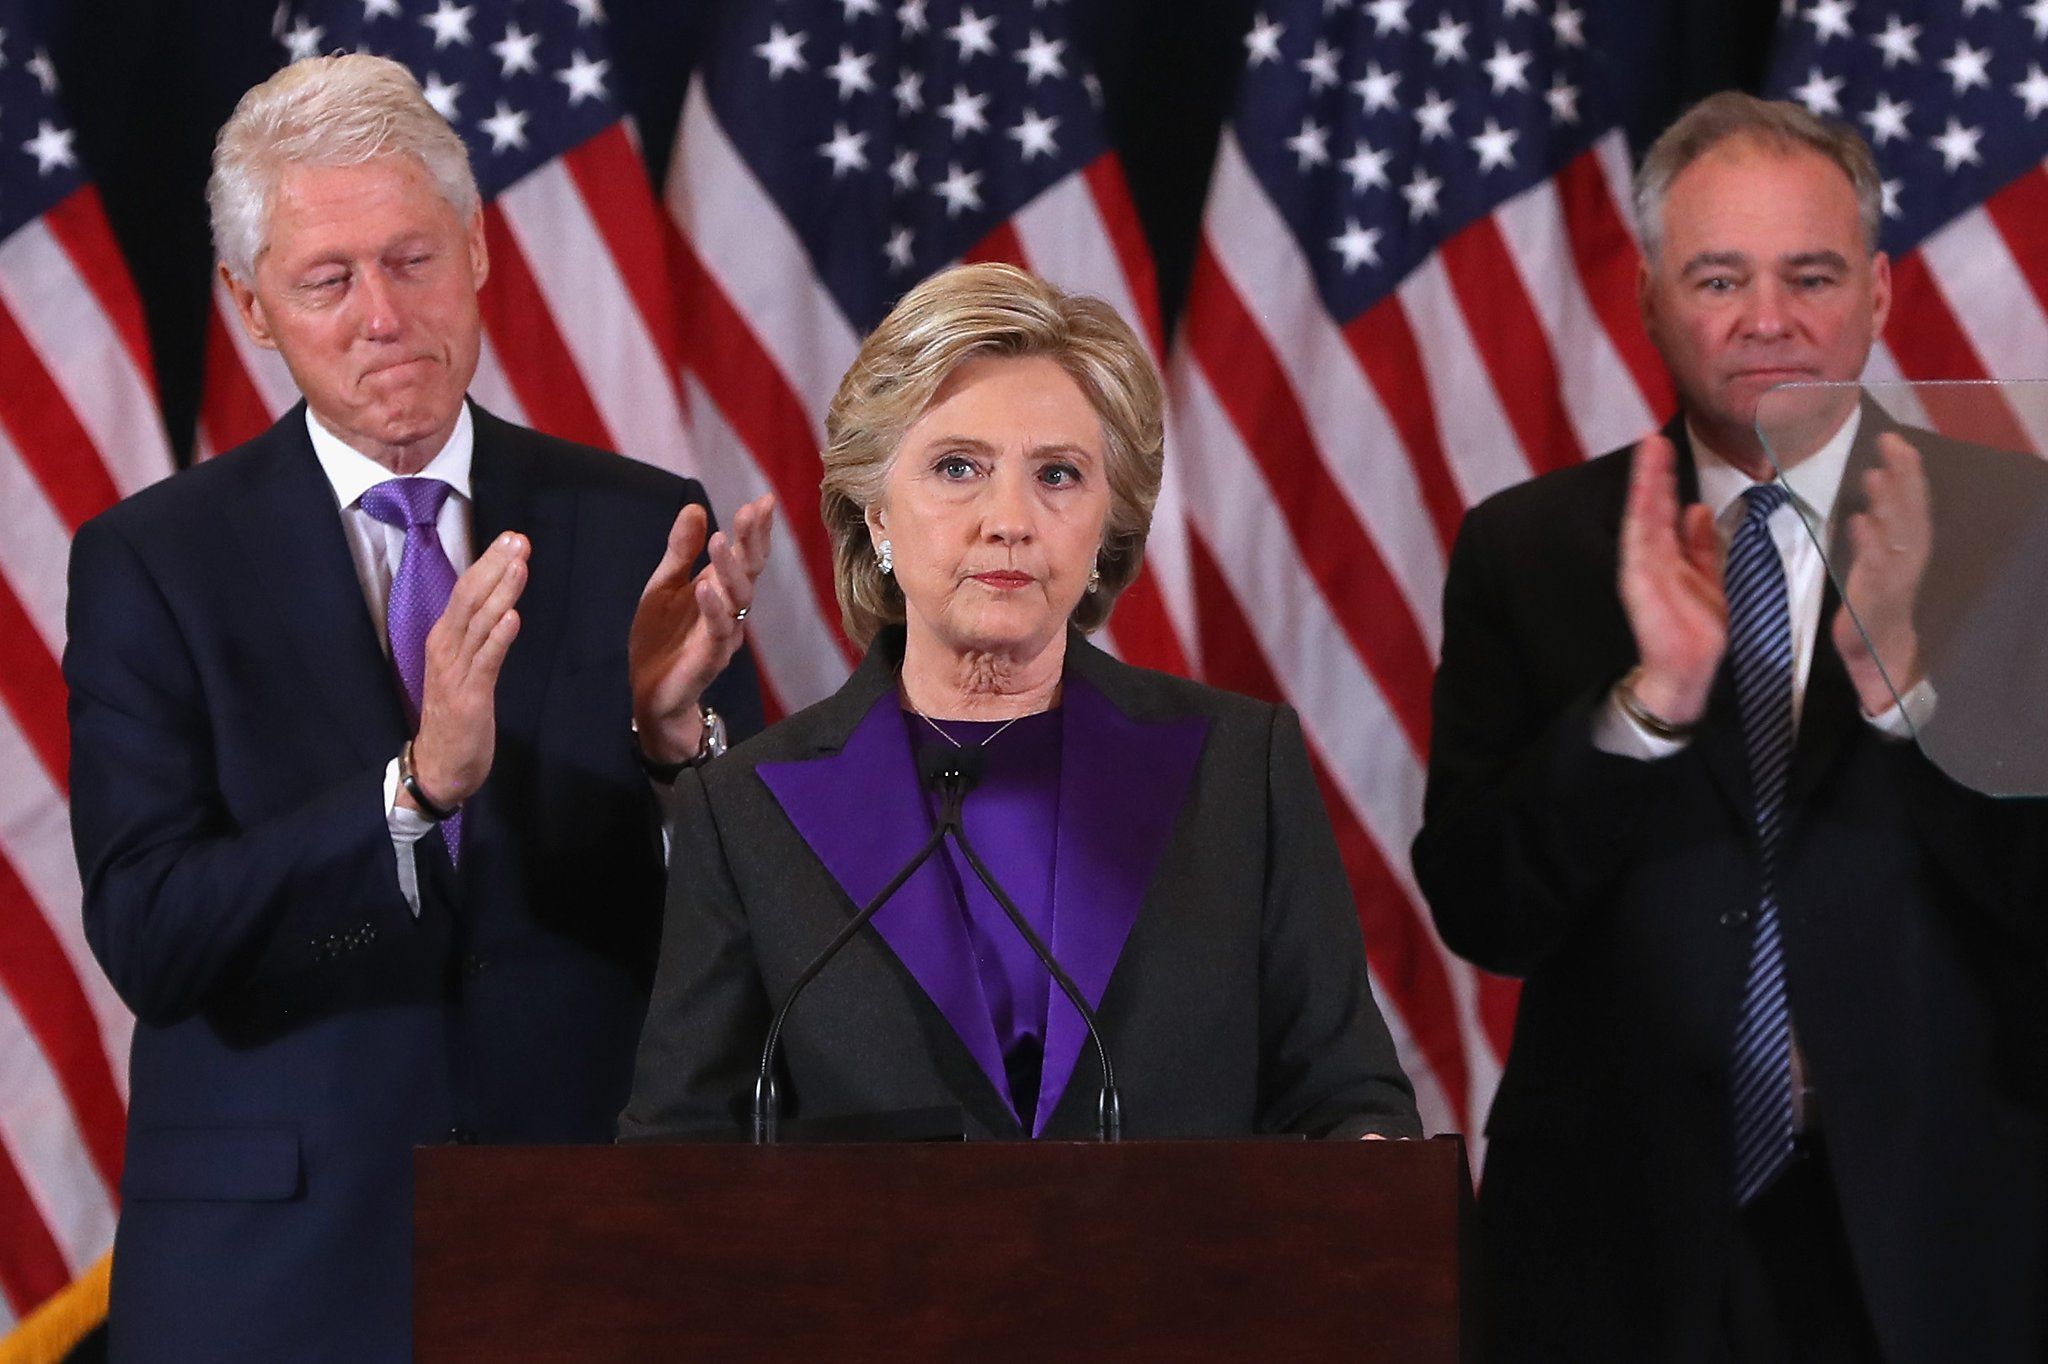 Hillary Clinton Sends Inspirational Message With Purple Dress